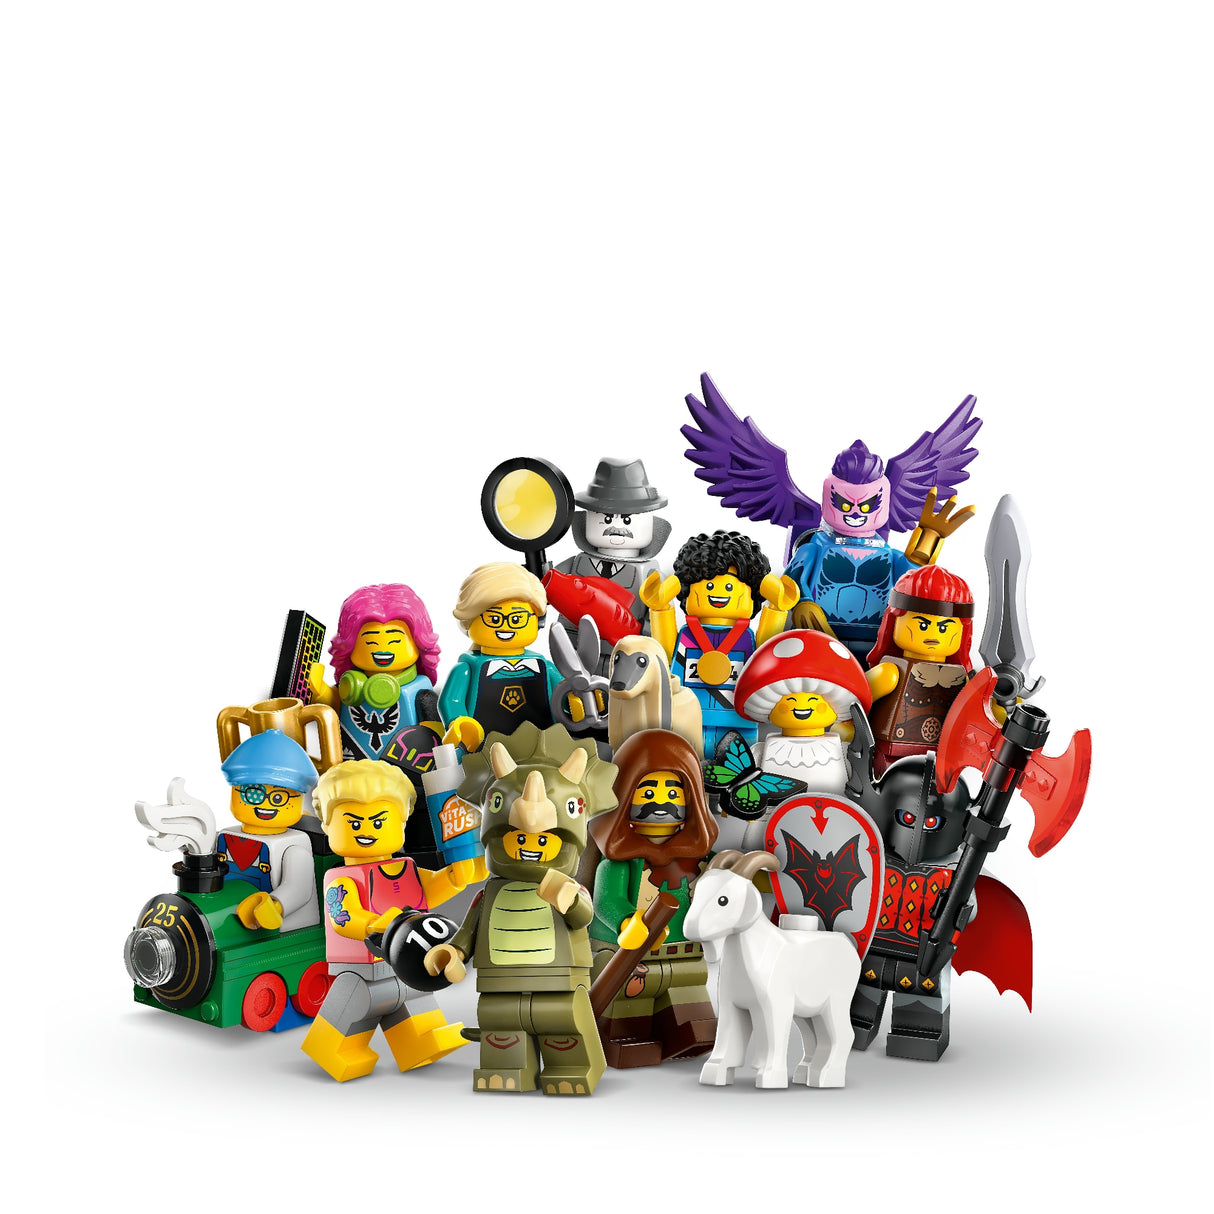 LEGO MINIFIGURES SERIES 25 71045 AGE: 5+